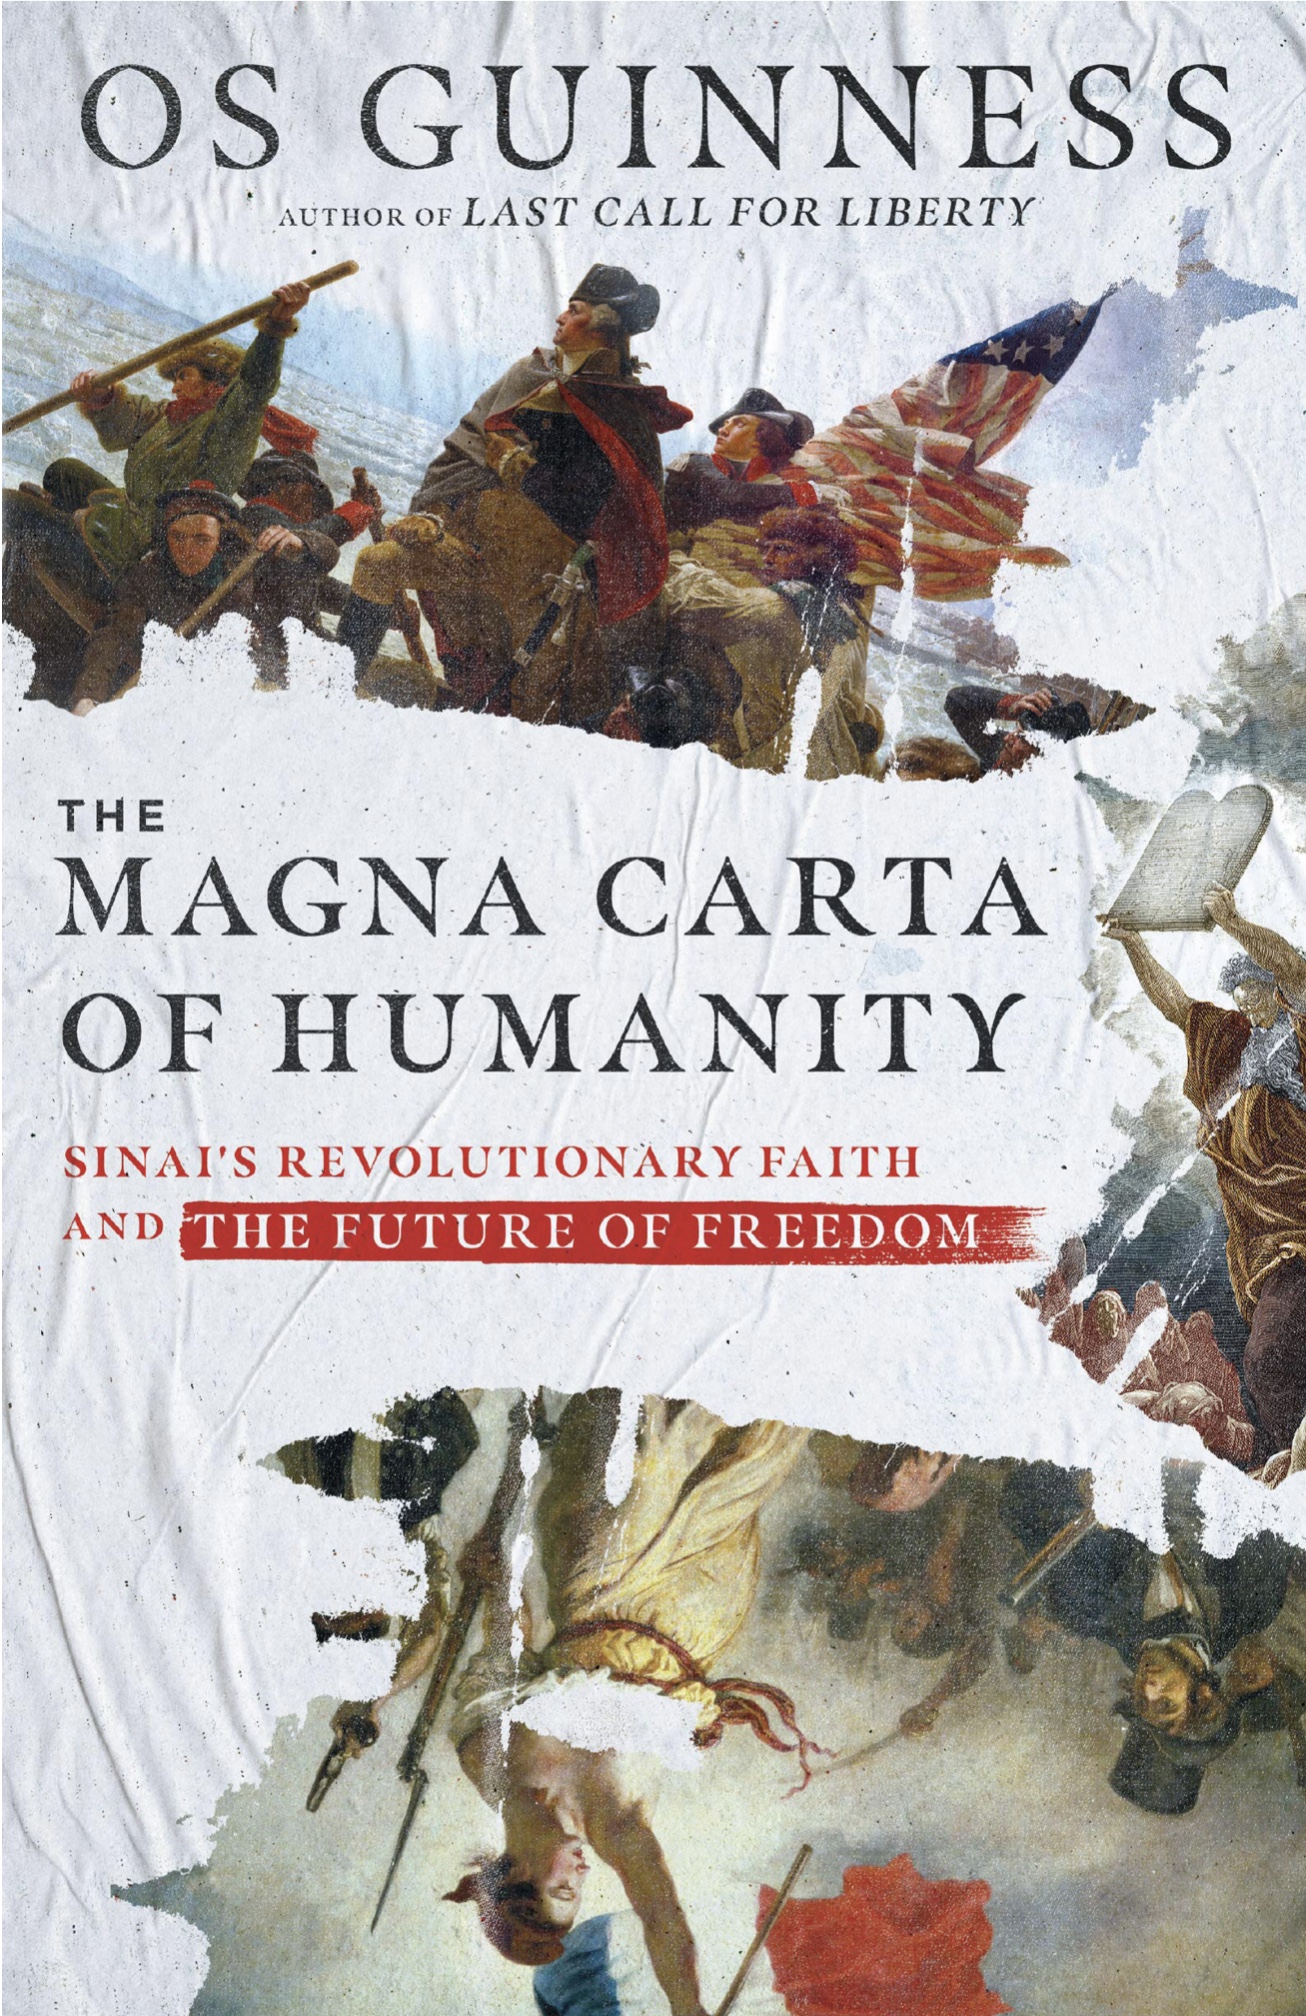 The Magna Carta of Humanity: Sinai’s Revolutionary Faith and the Future of Freedom